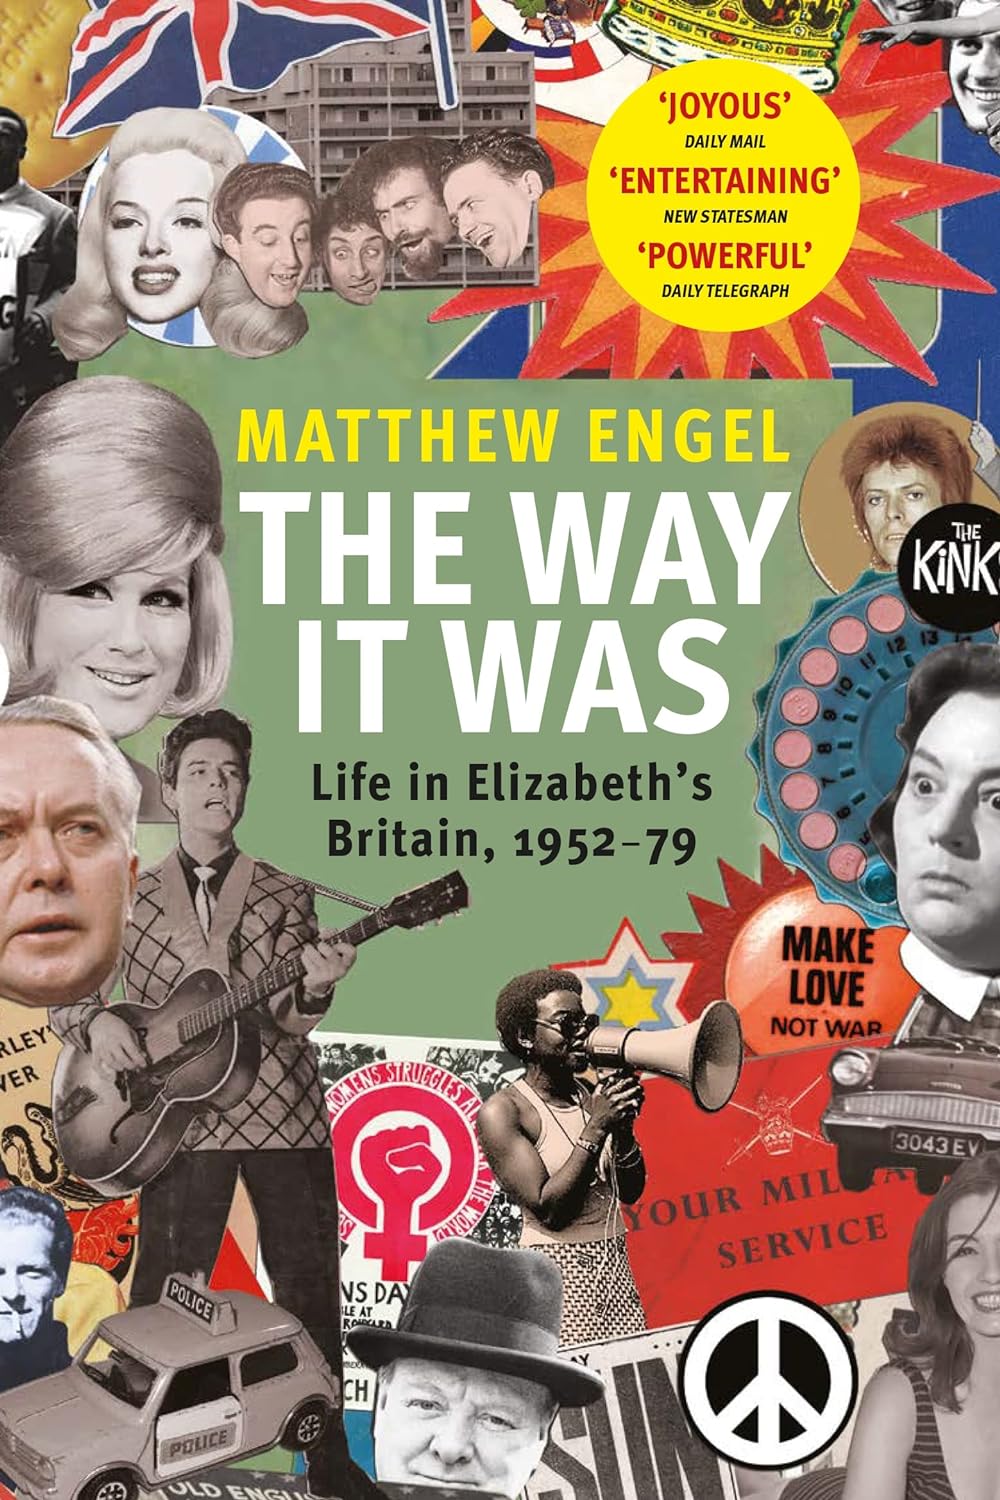 Matthew_Engel_The_way_it_was_life_in_Elizabeths_Britain_1952-79